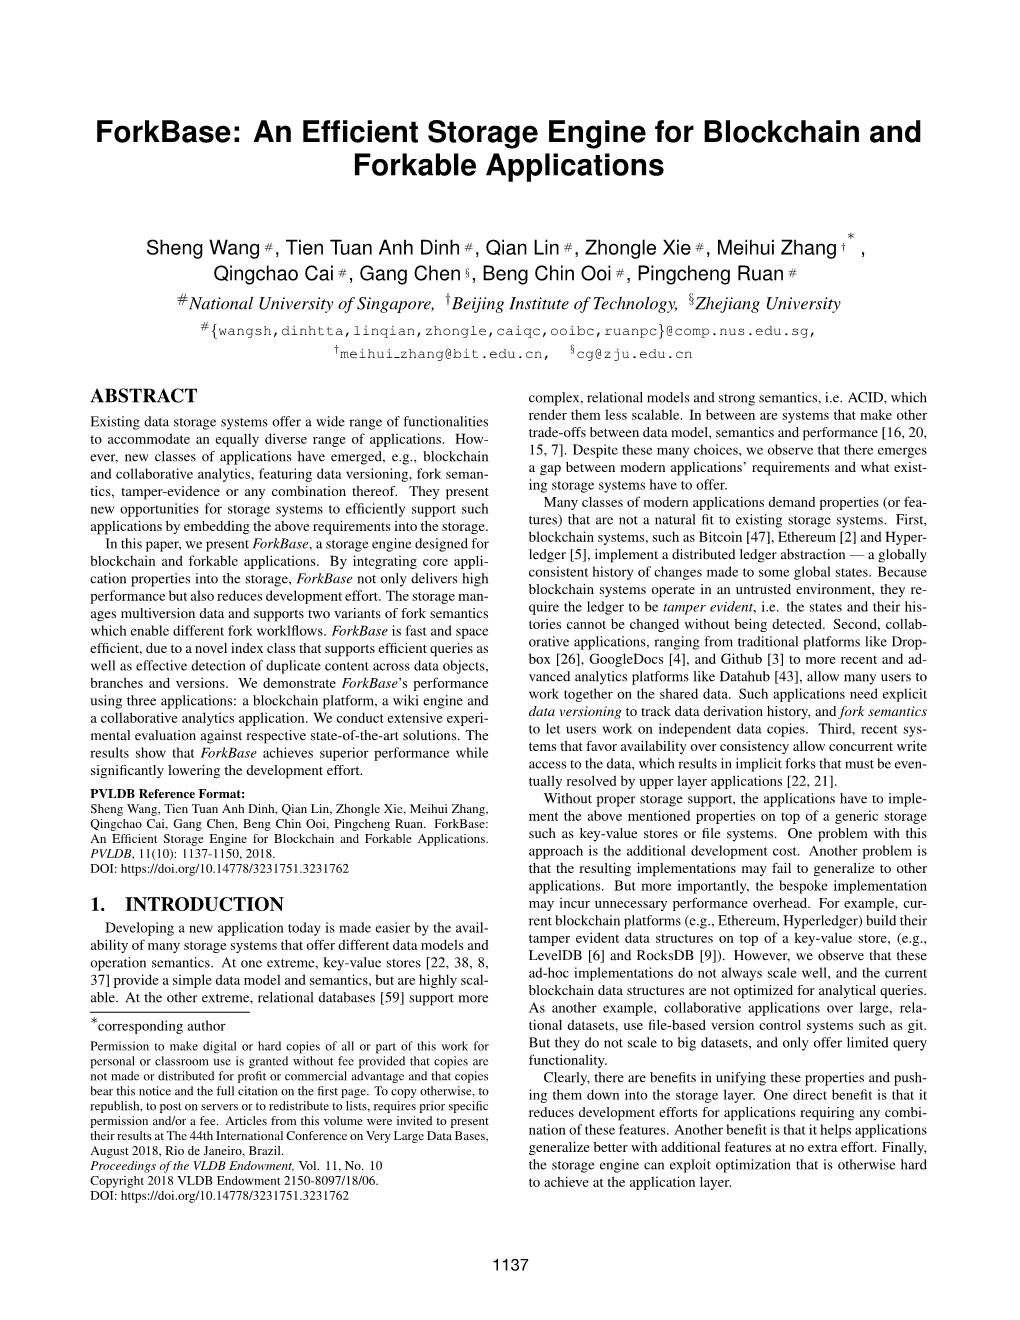 Forkbase: an Efficient Storage Engine for Blockchain